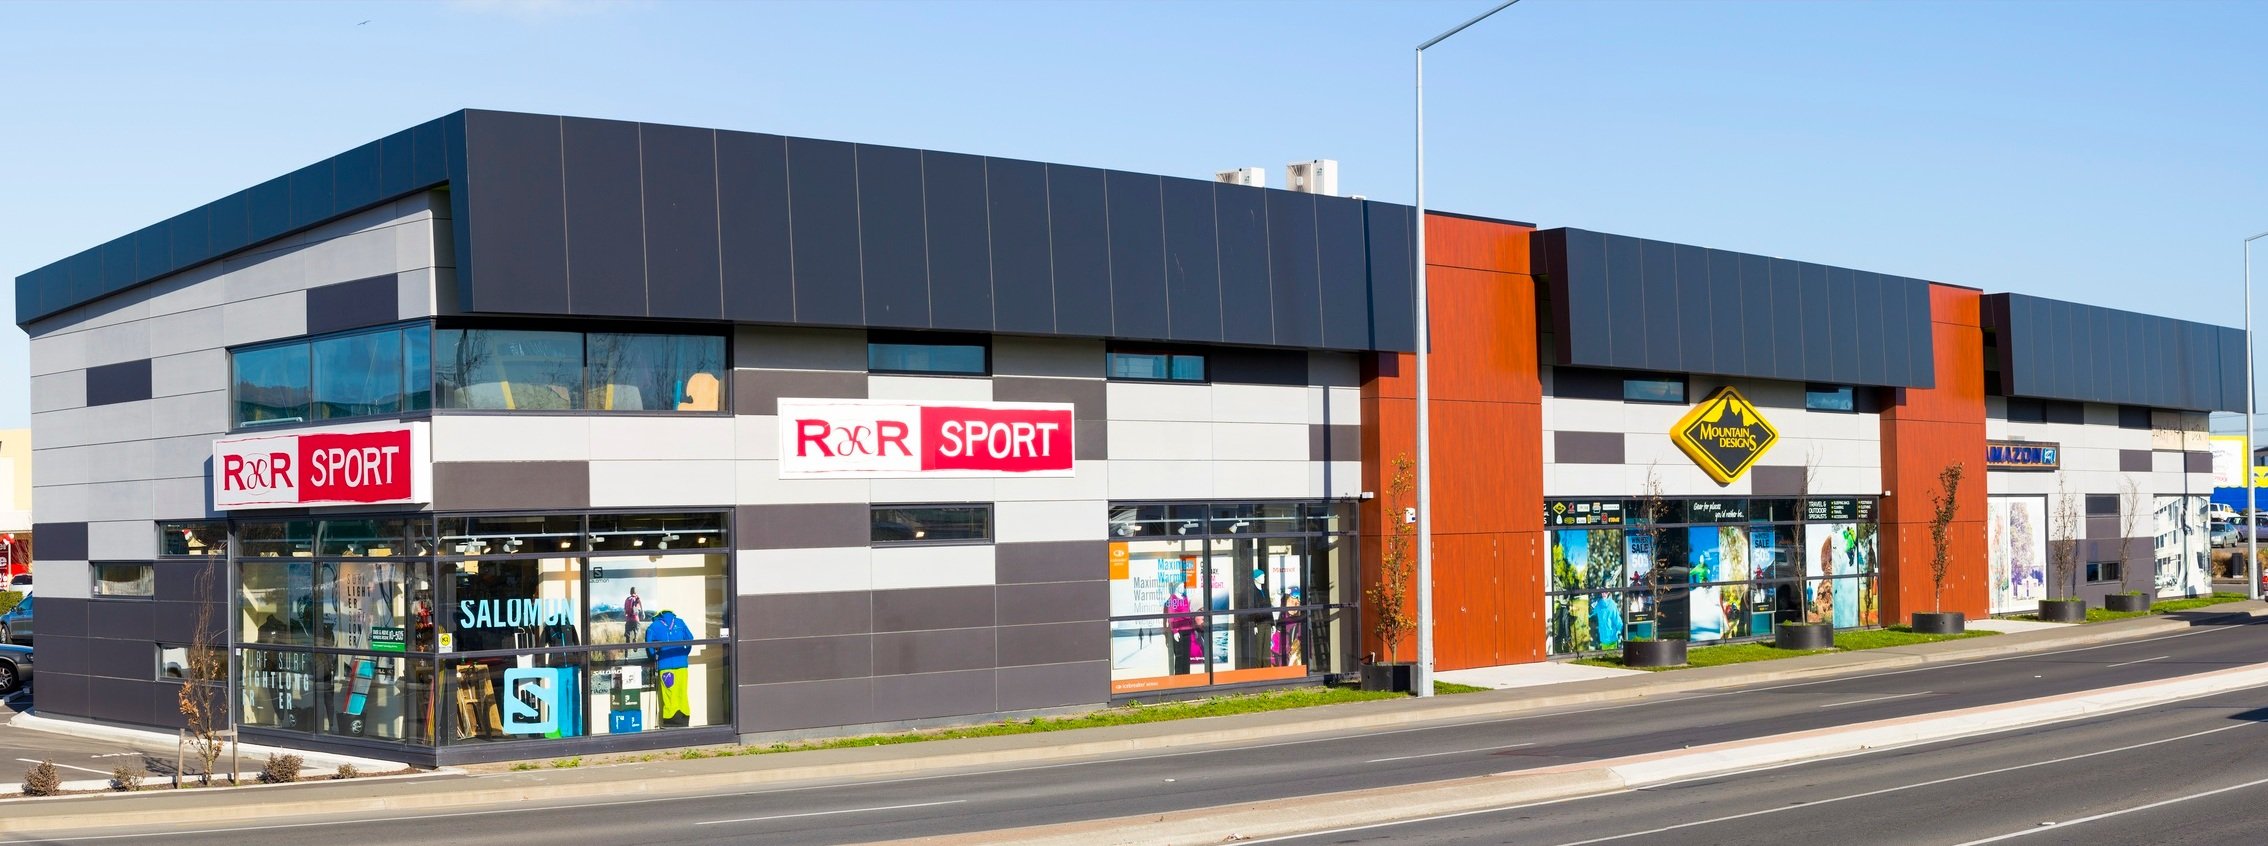 R&R Sport / Mountain Designs / Amazon - 65 Blenheim Road Retail Development, Christchurch